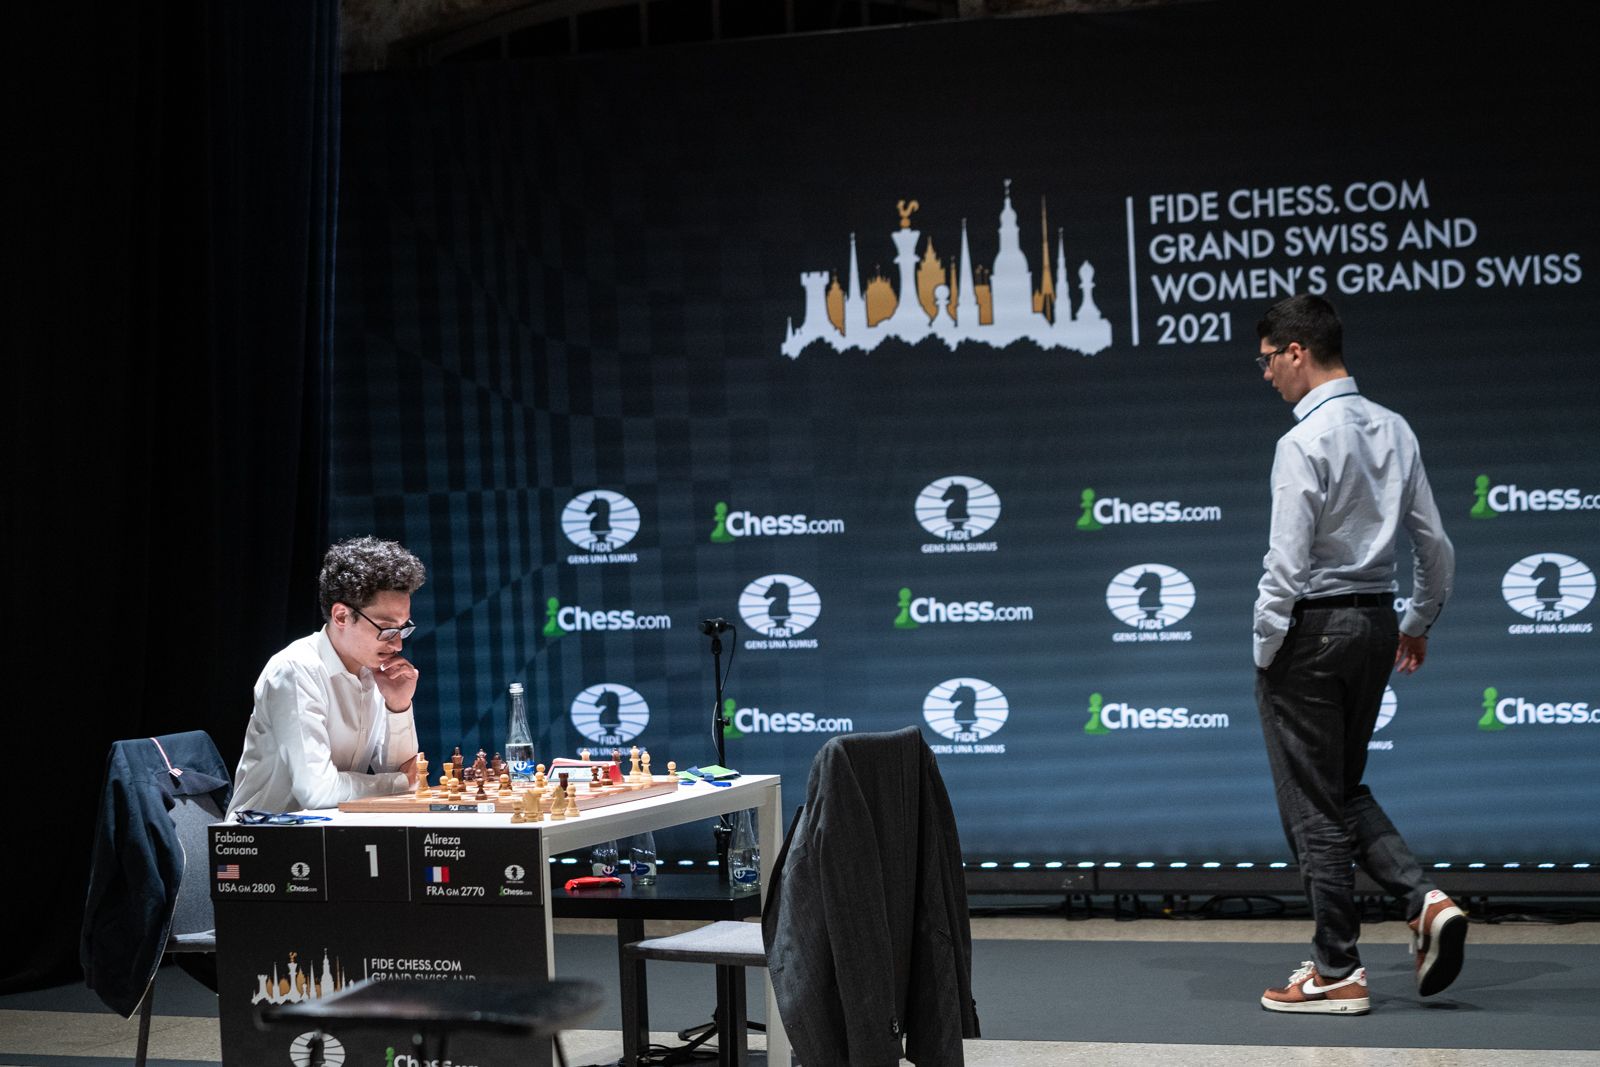 FIDE  Grand Swiss R8: Firouzja Increases Lead, Now World #4 